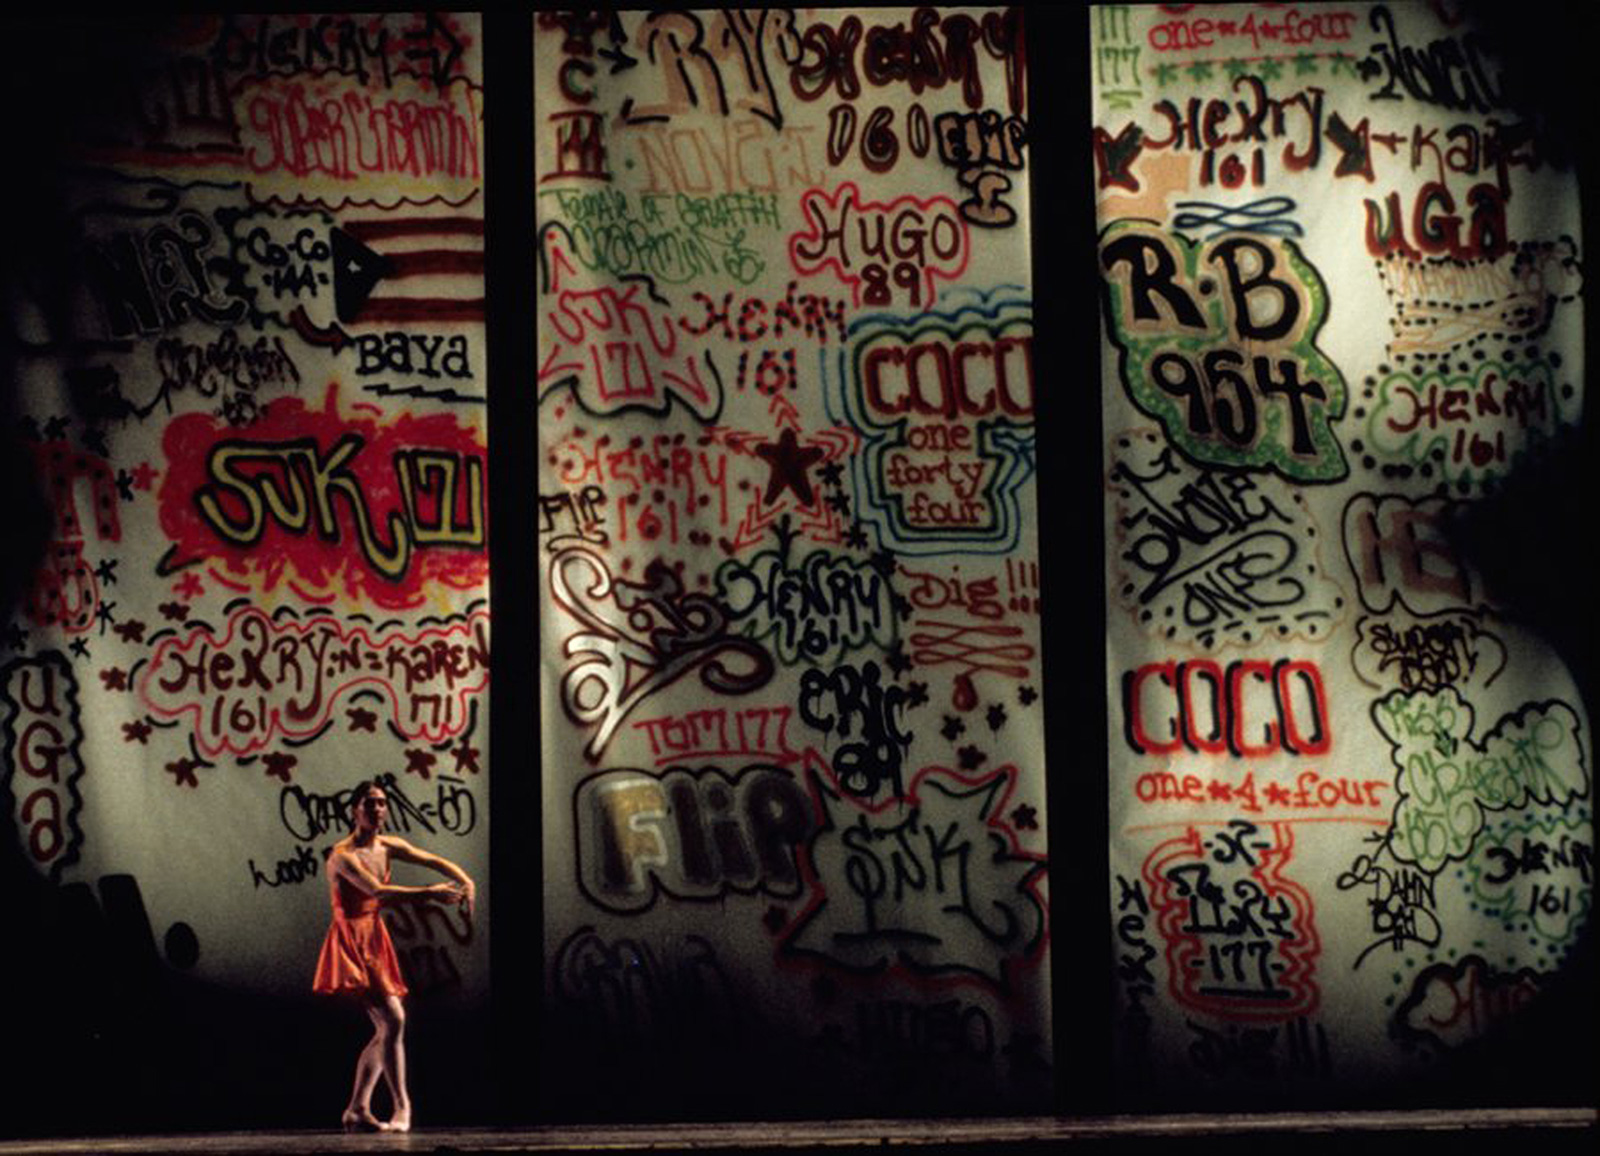 Dancer and graffiti